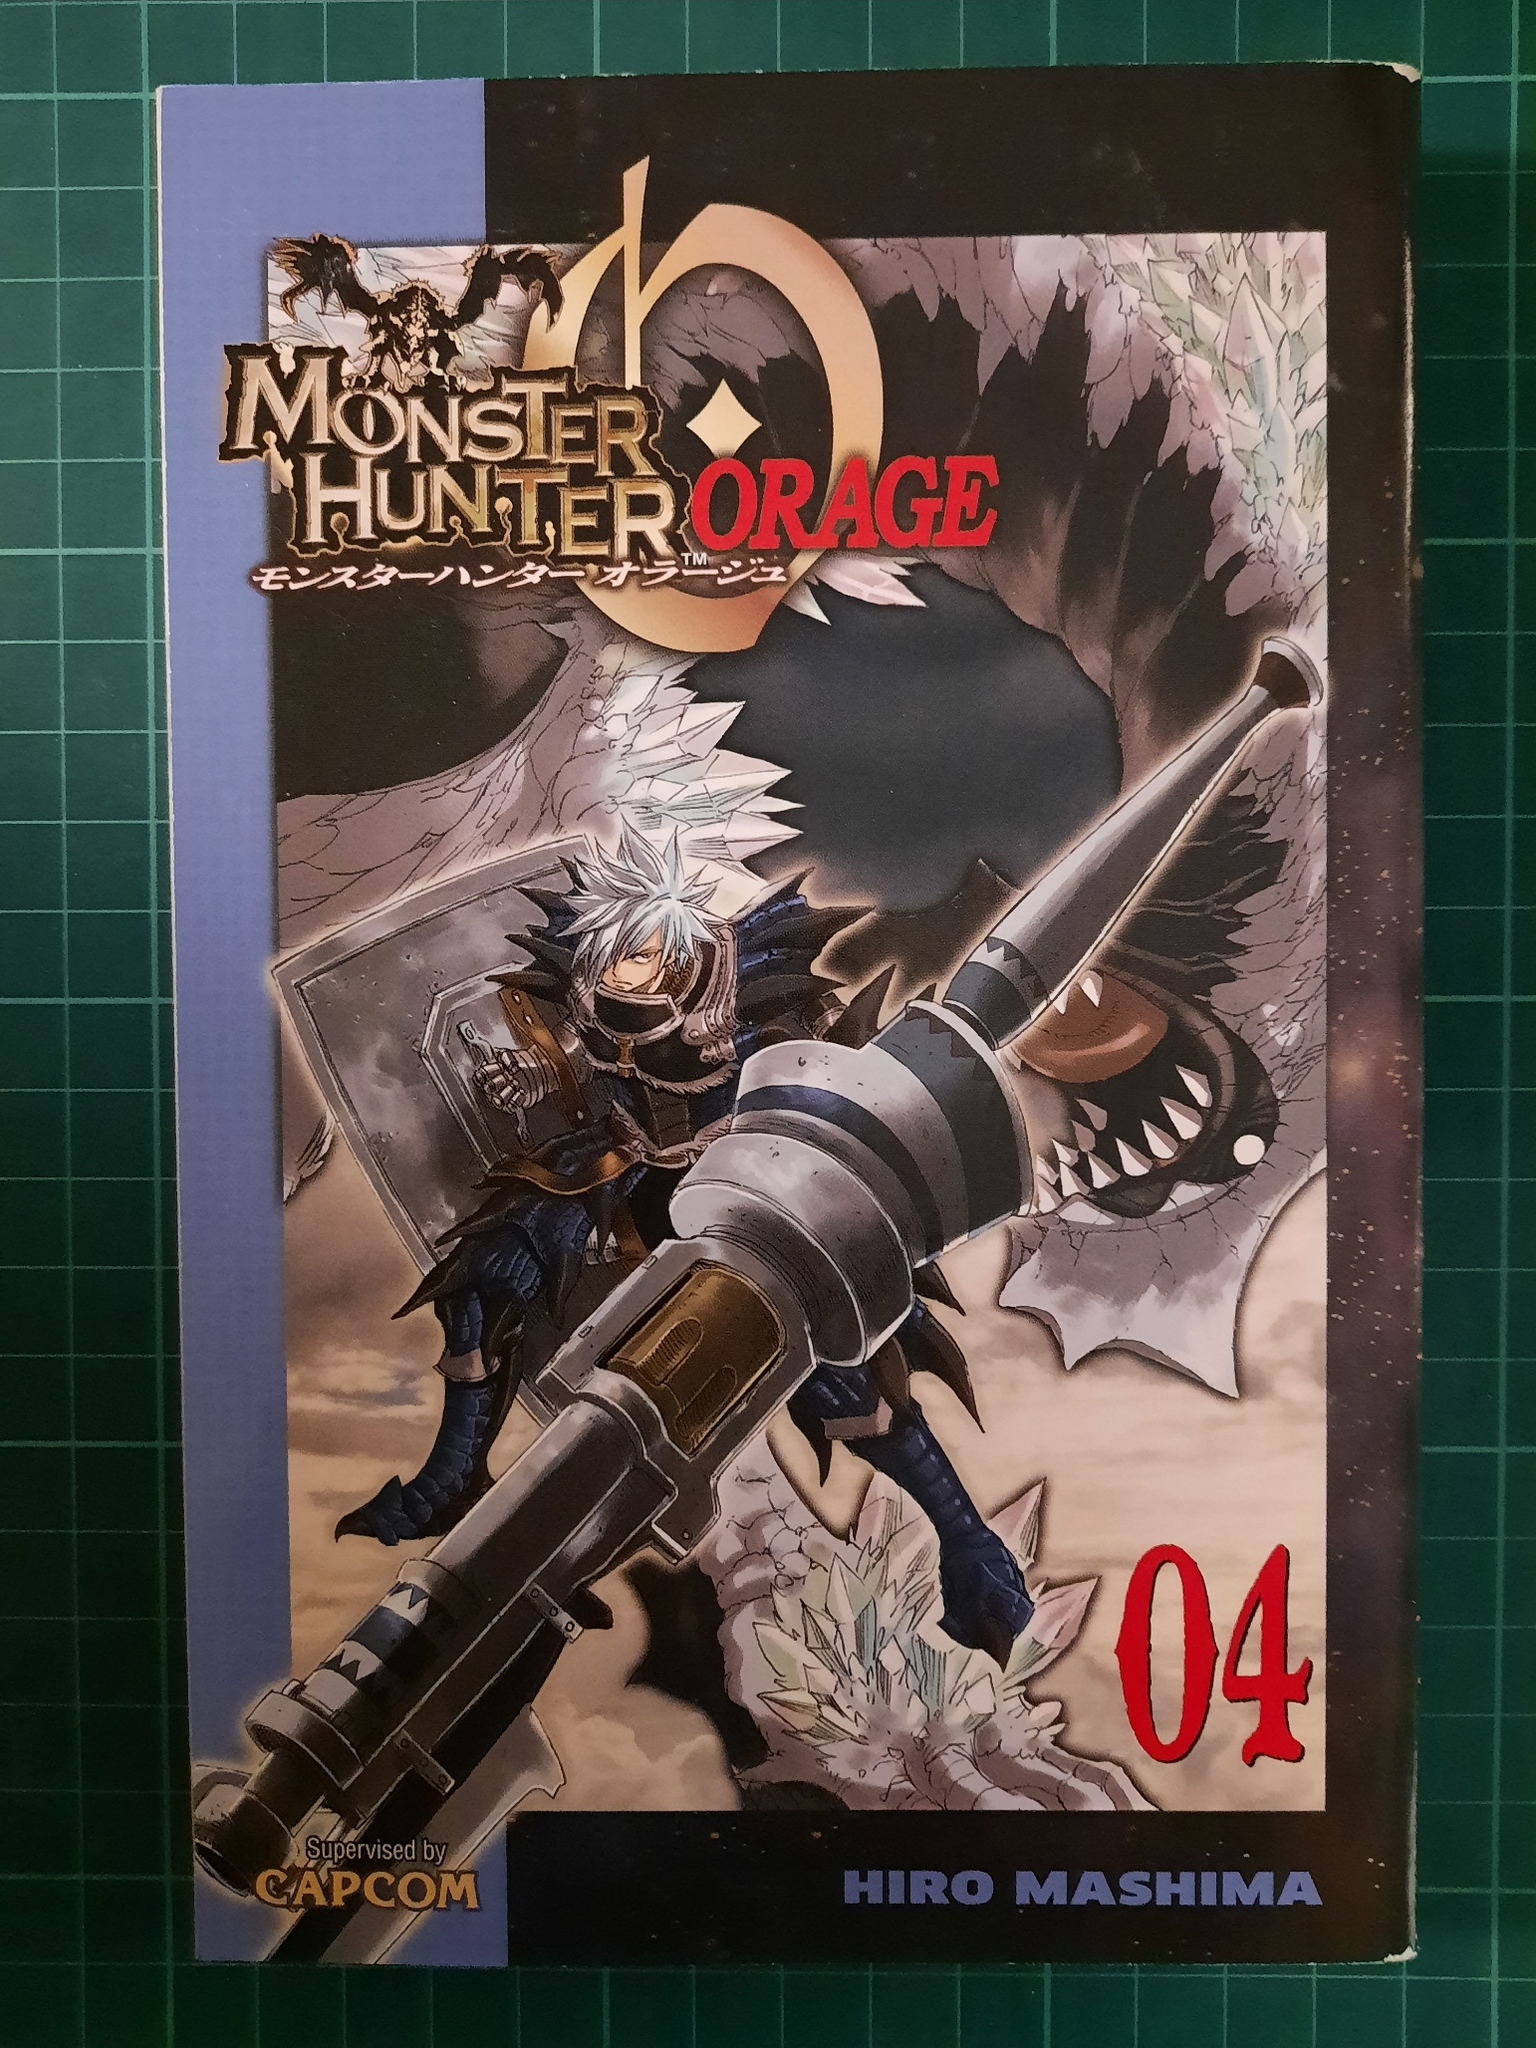 Monster hunter orage #4